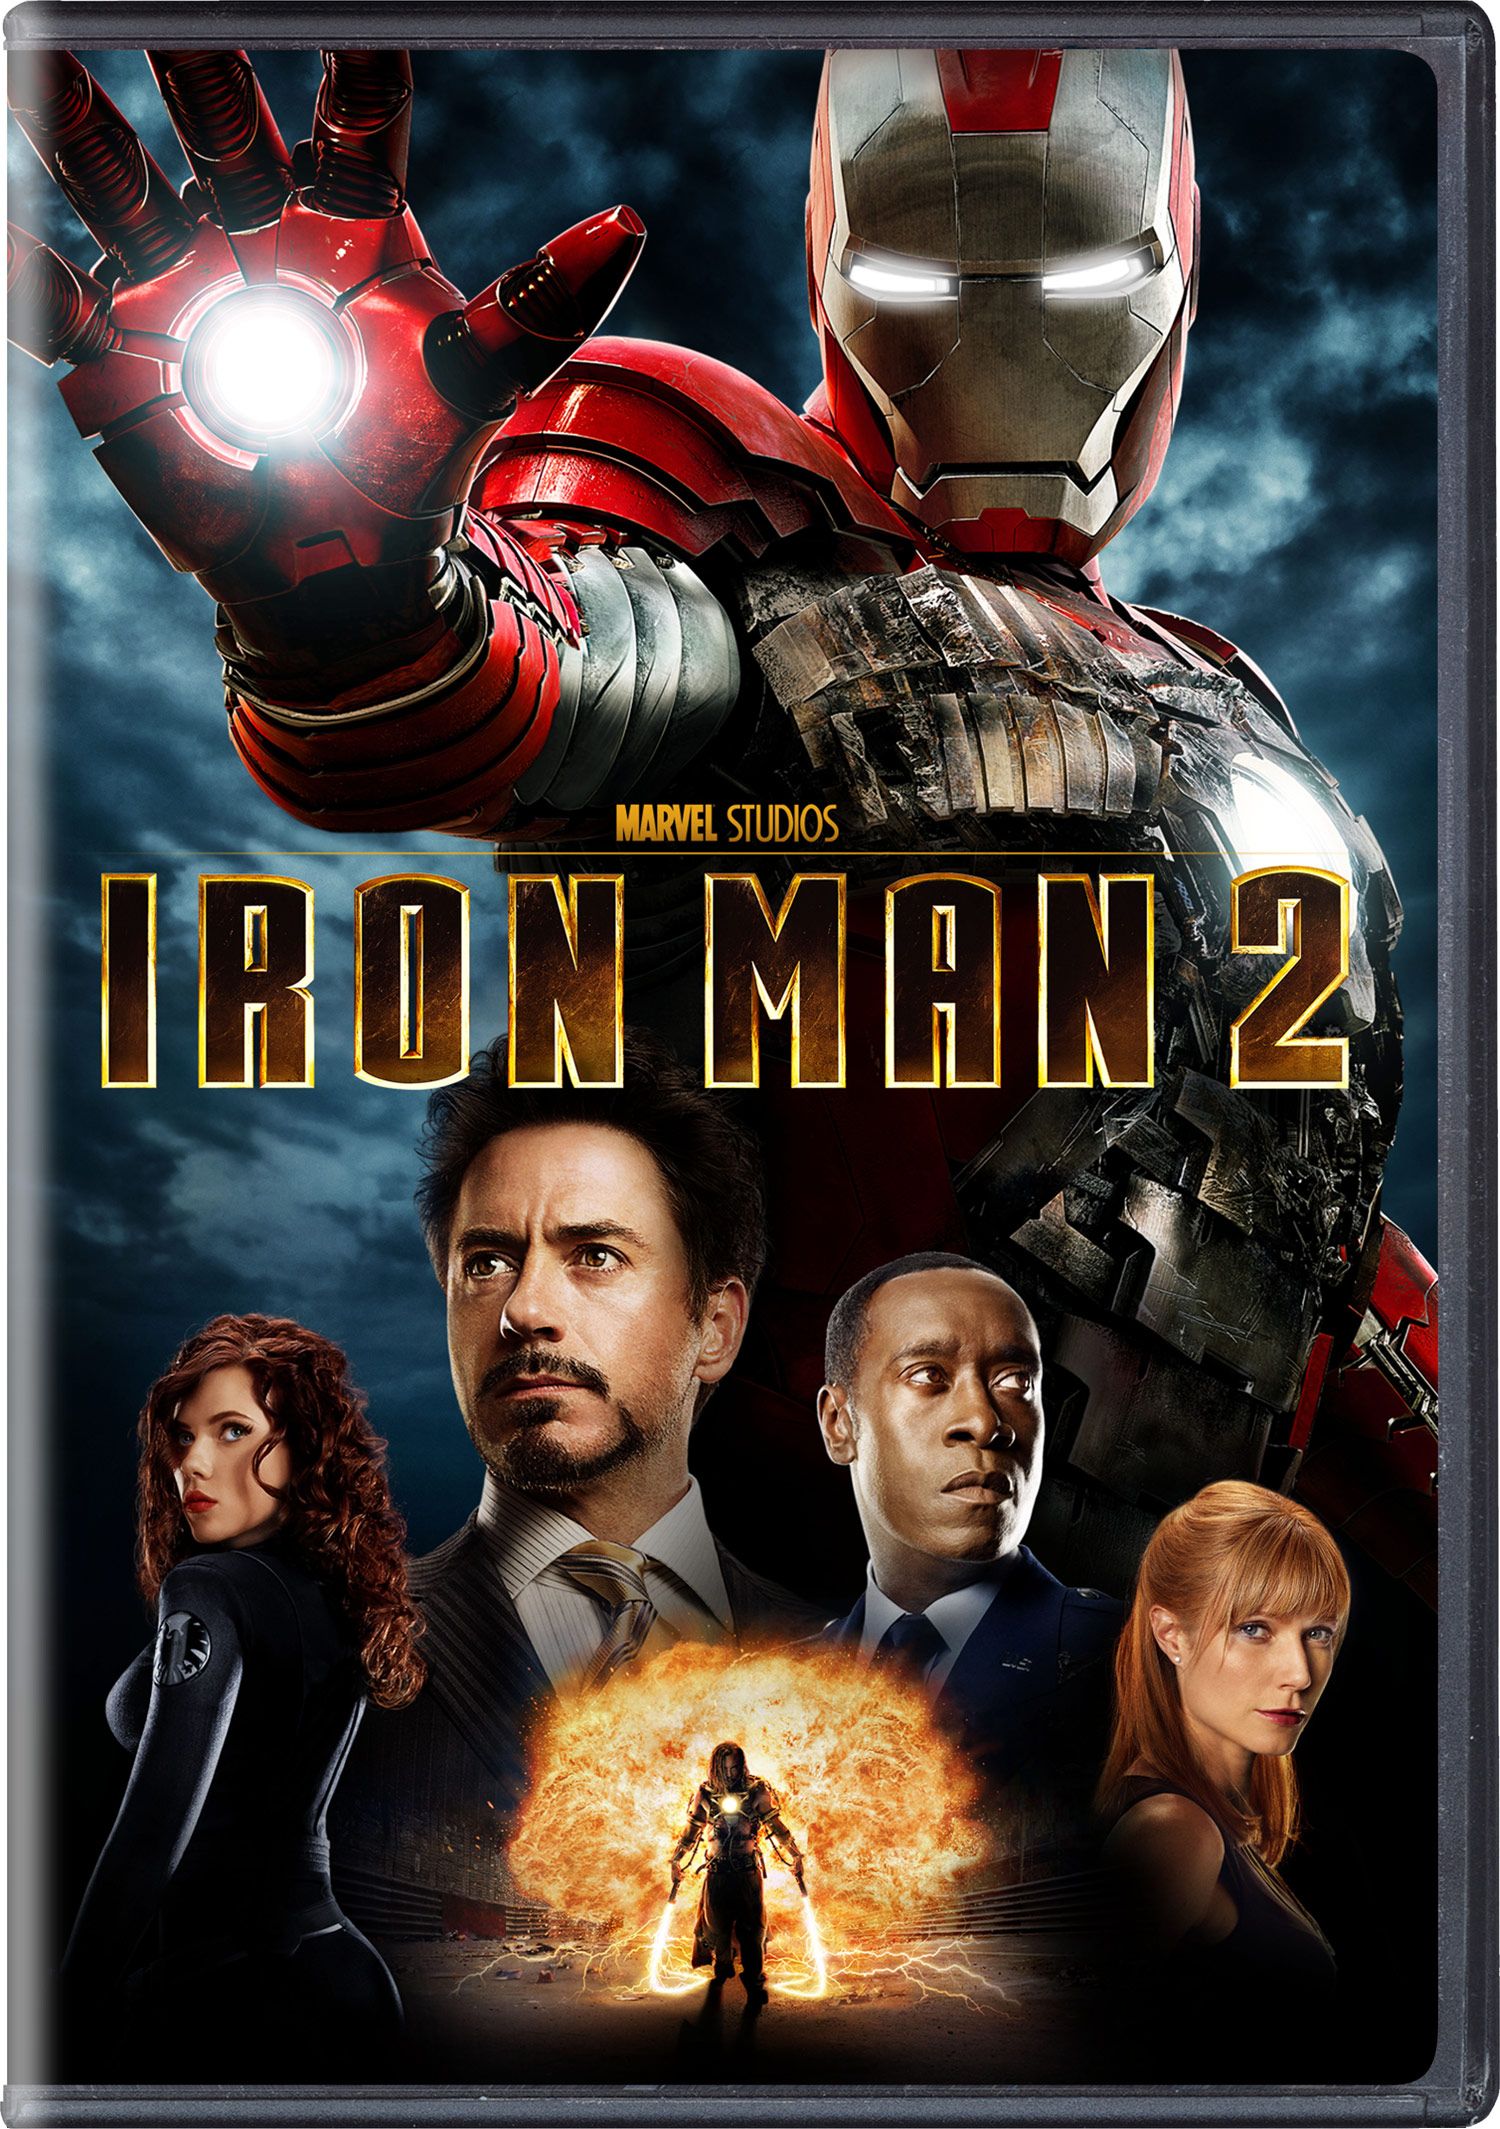 Iron Man 2 DVD cover art